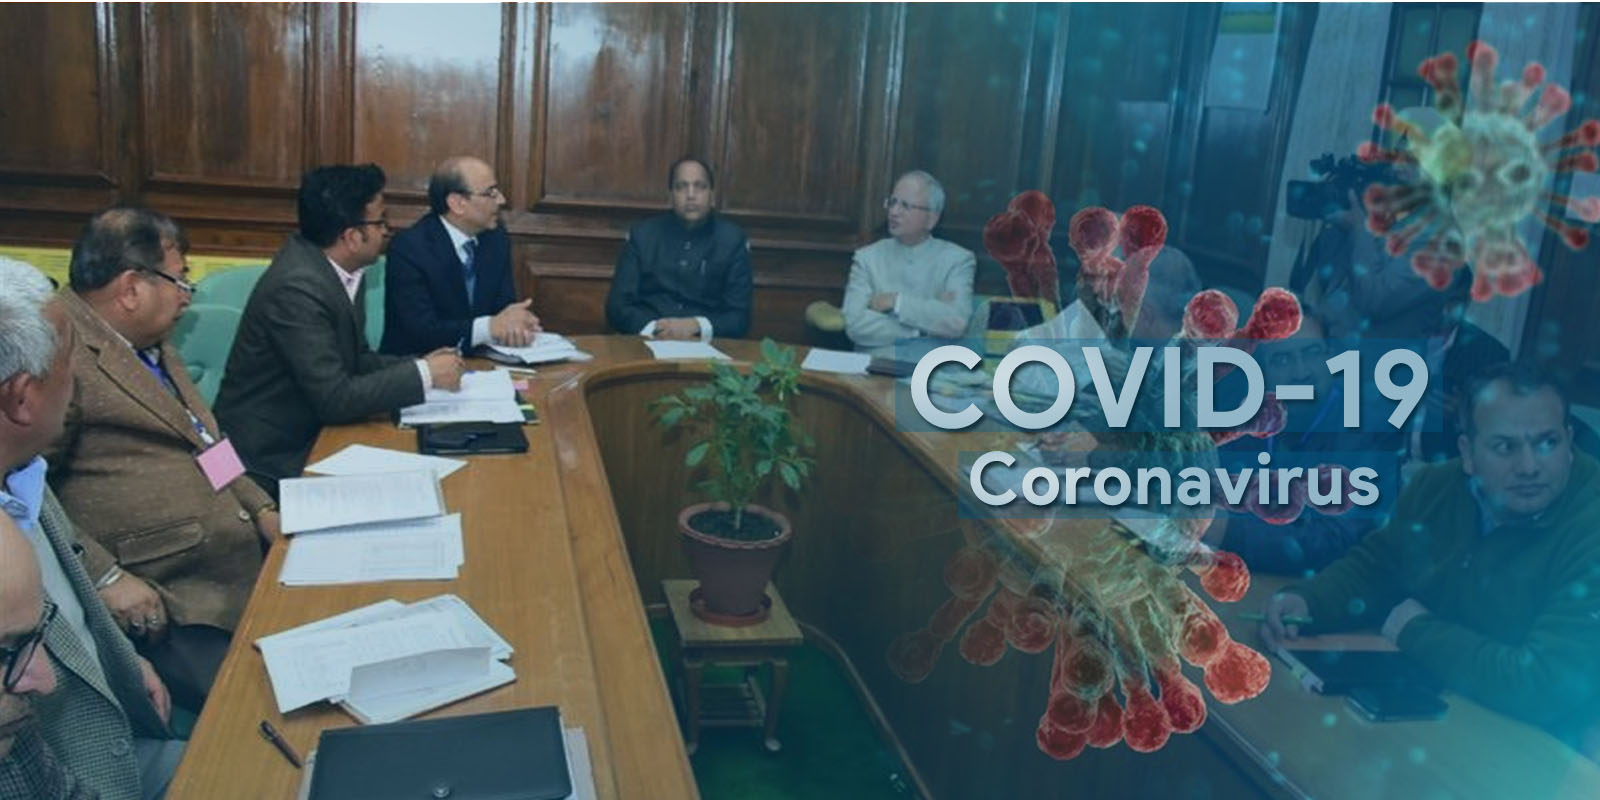 Coronavirus cases in himachal pradesh